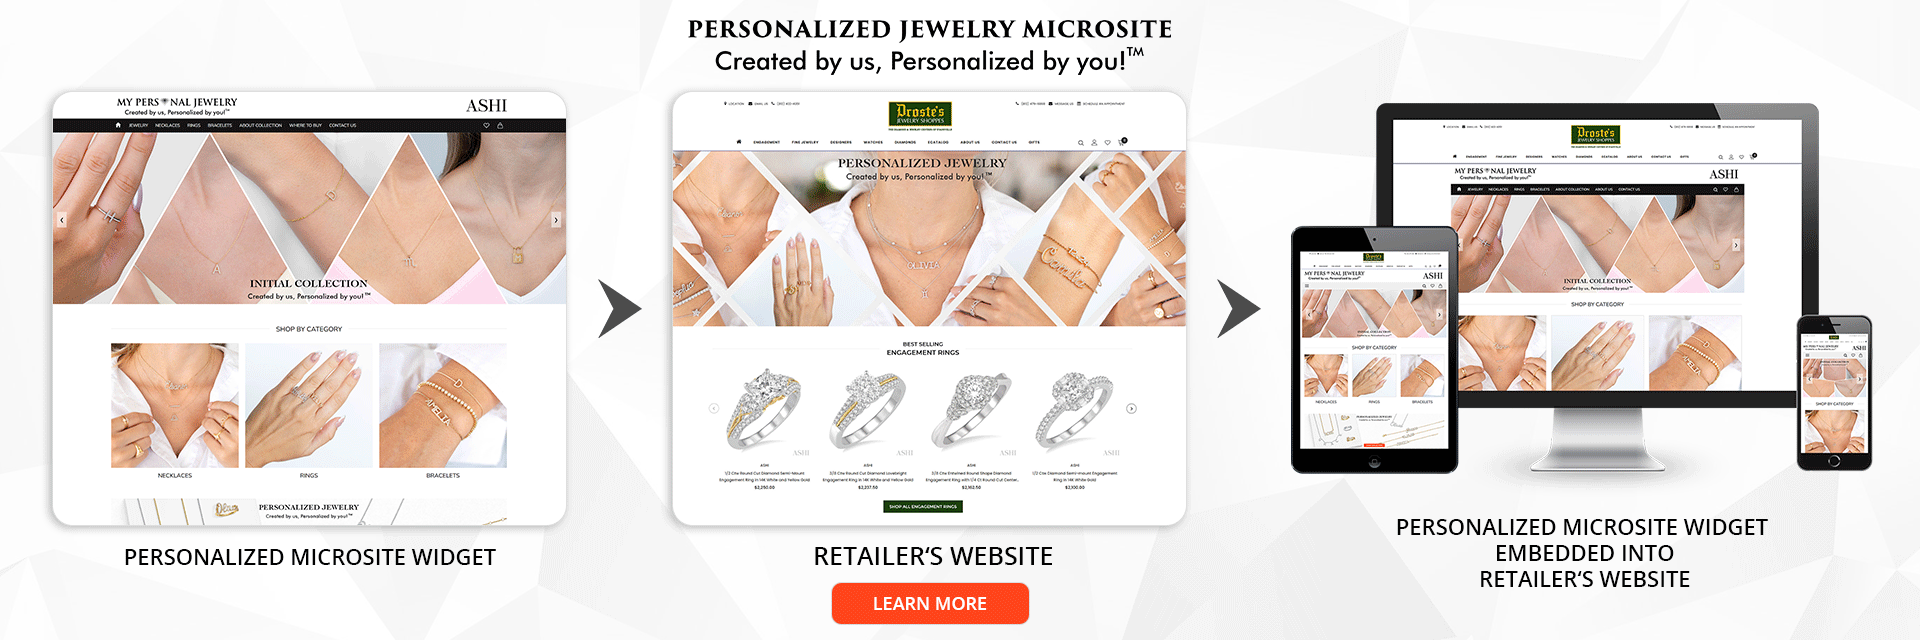 Personalized Jewelry Microsite